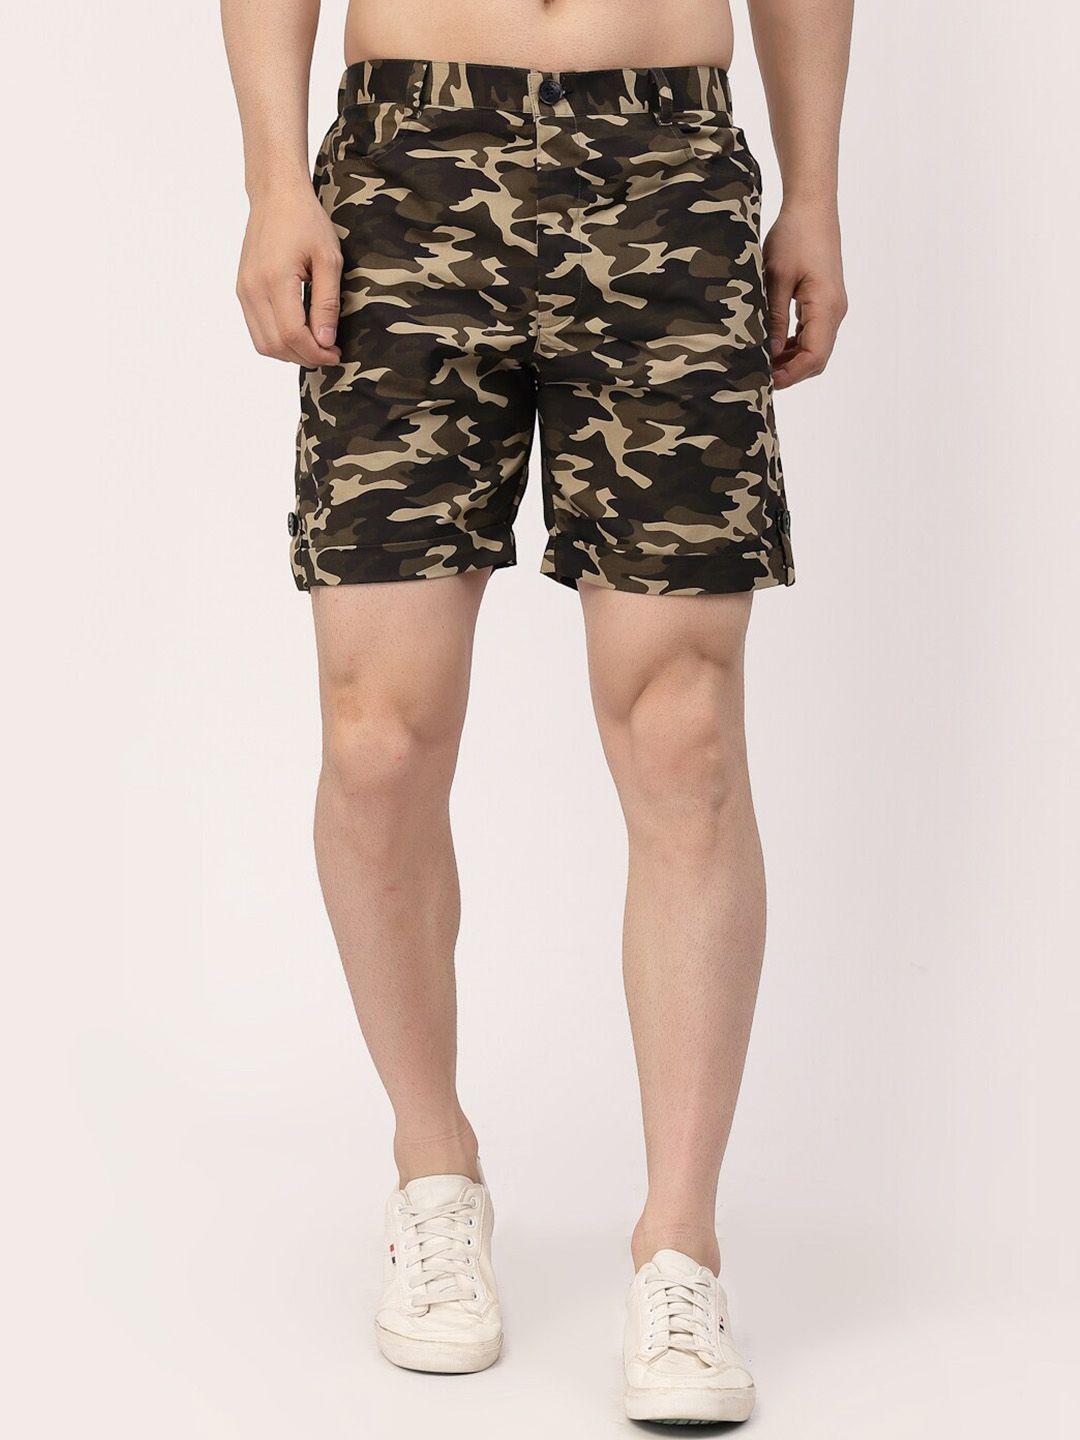 klotthe men camouflage printed mid-rise cotton shorts